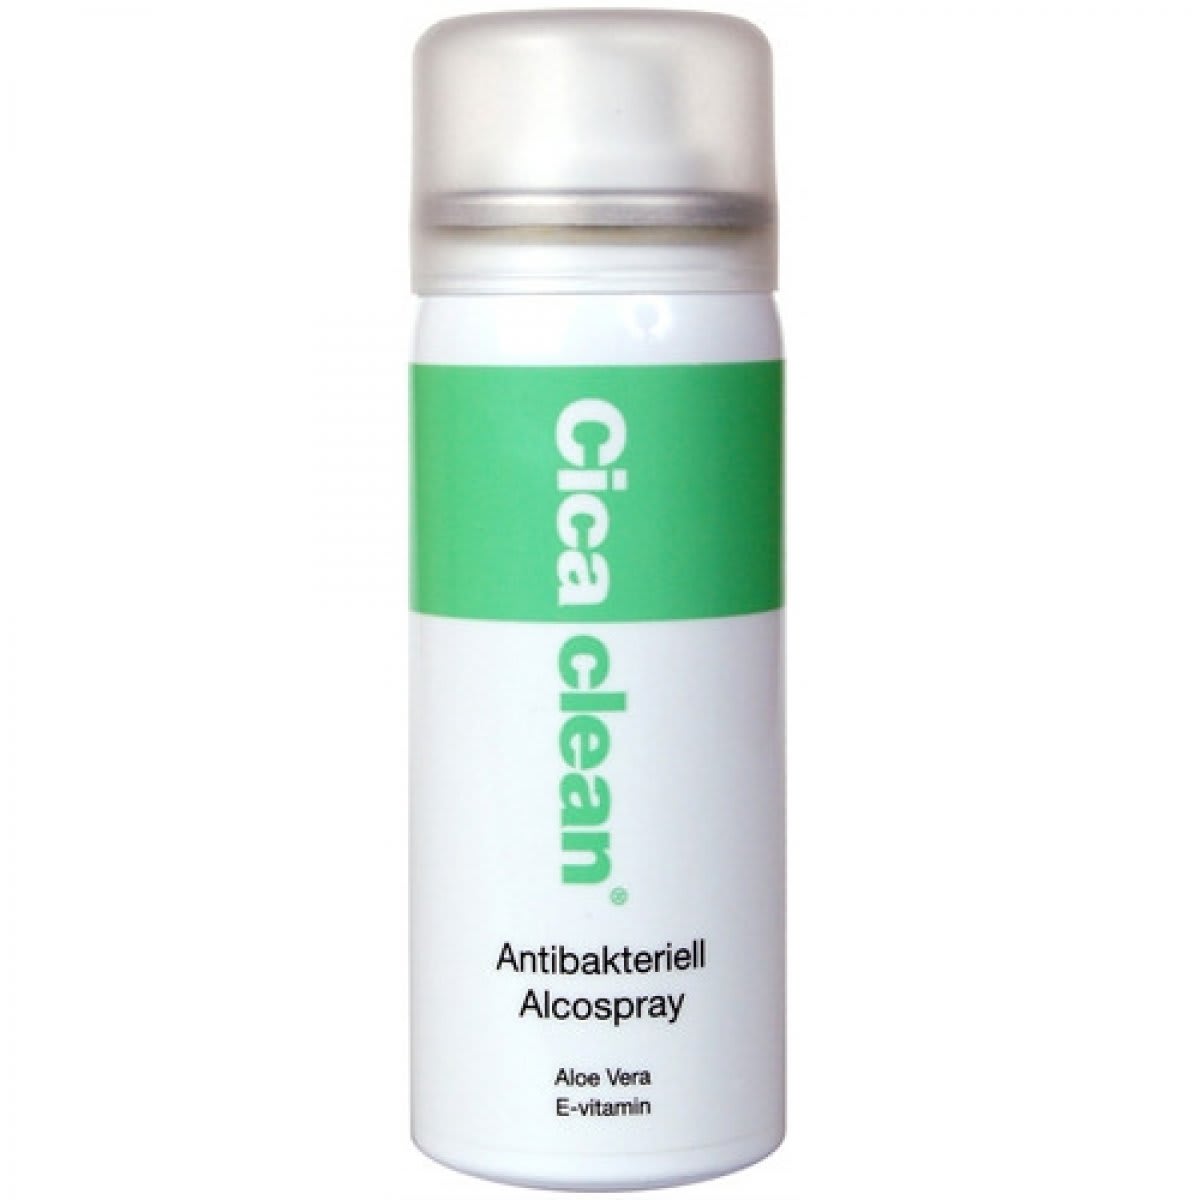 Cicamed Cicaclean Antibakteriell Alcospray 70%